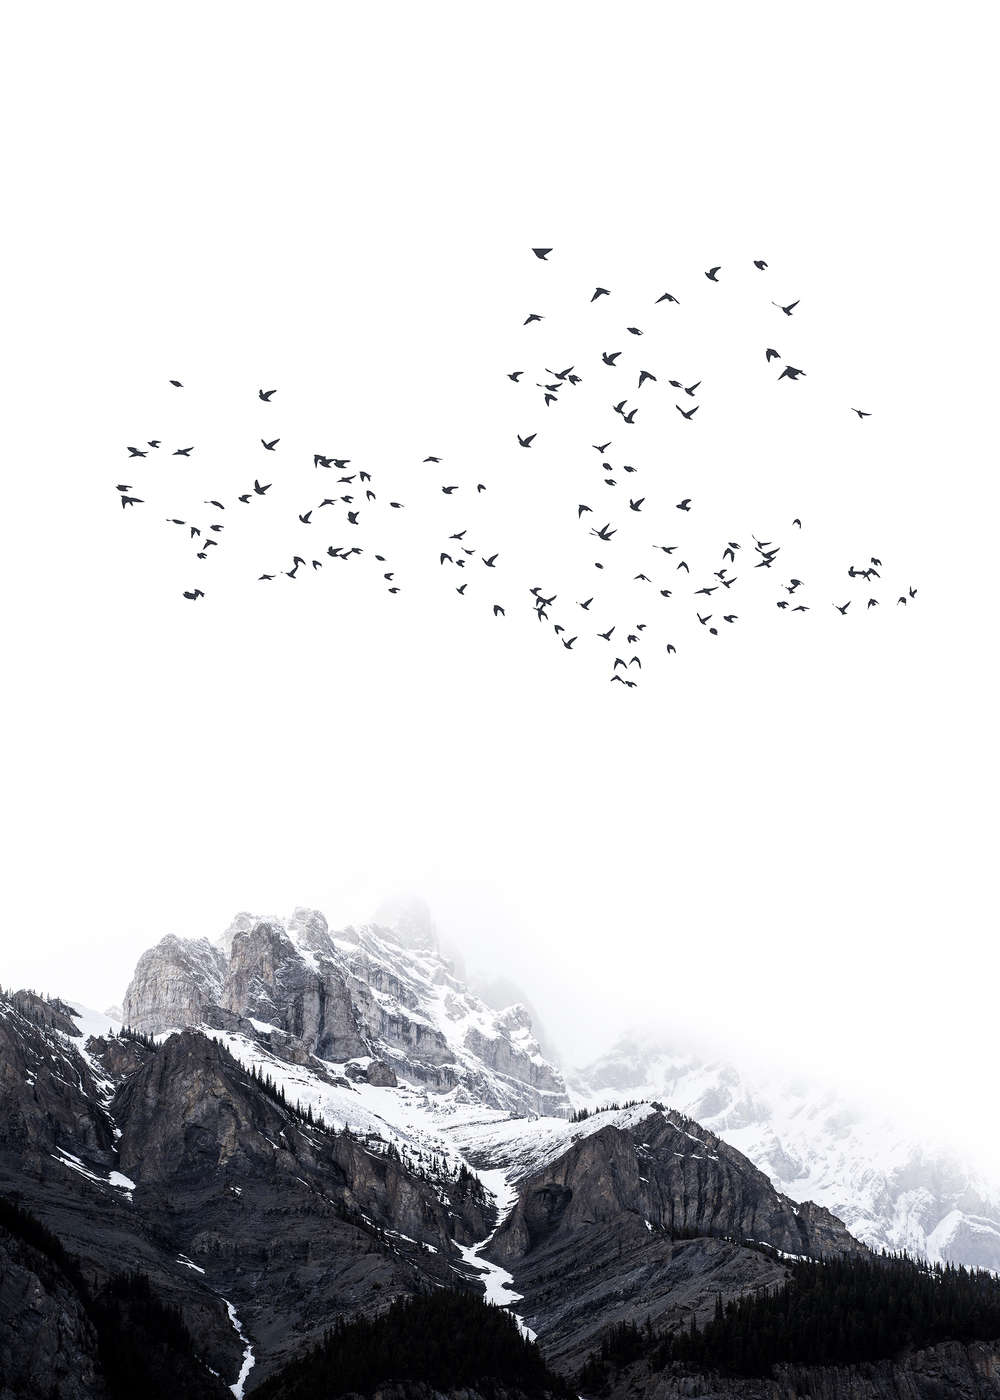             Landschaft Fototapete schneebedeckte Berge & Zugvögel
        